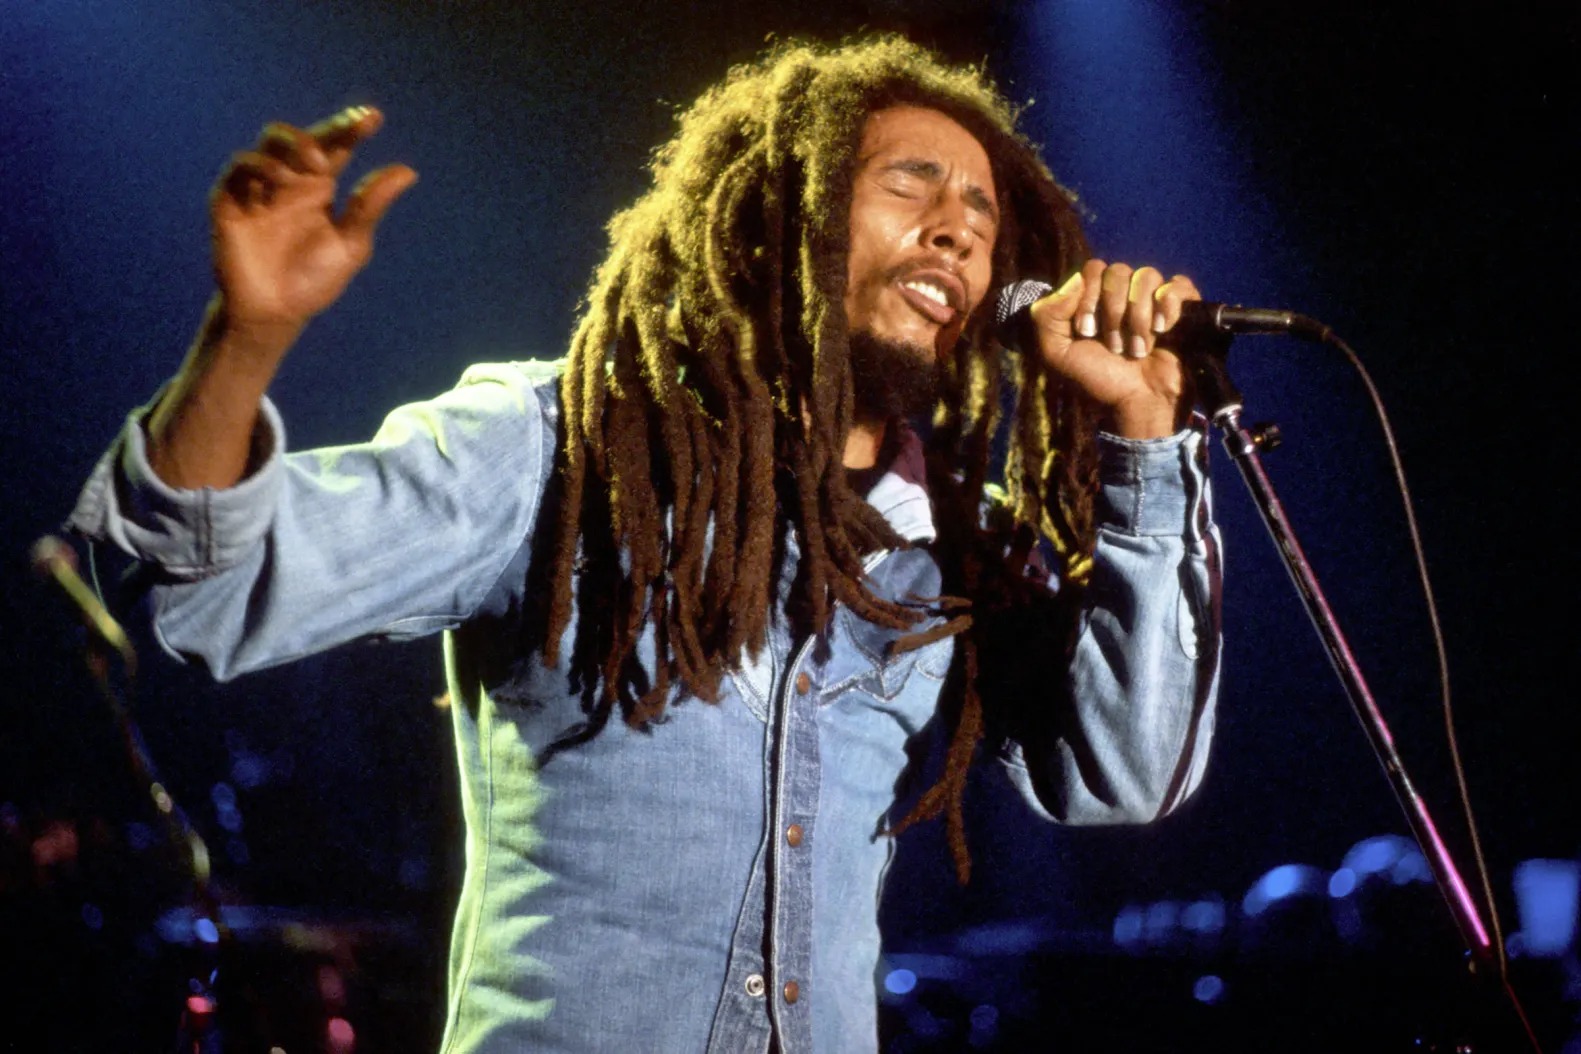 Bob Marley yatangaga ubutumwa bushishikariza abantu kurangwa n'amahoro n'urukundo no kwirinda amacakubiri